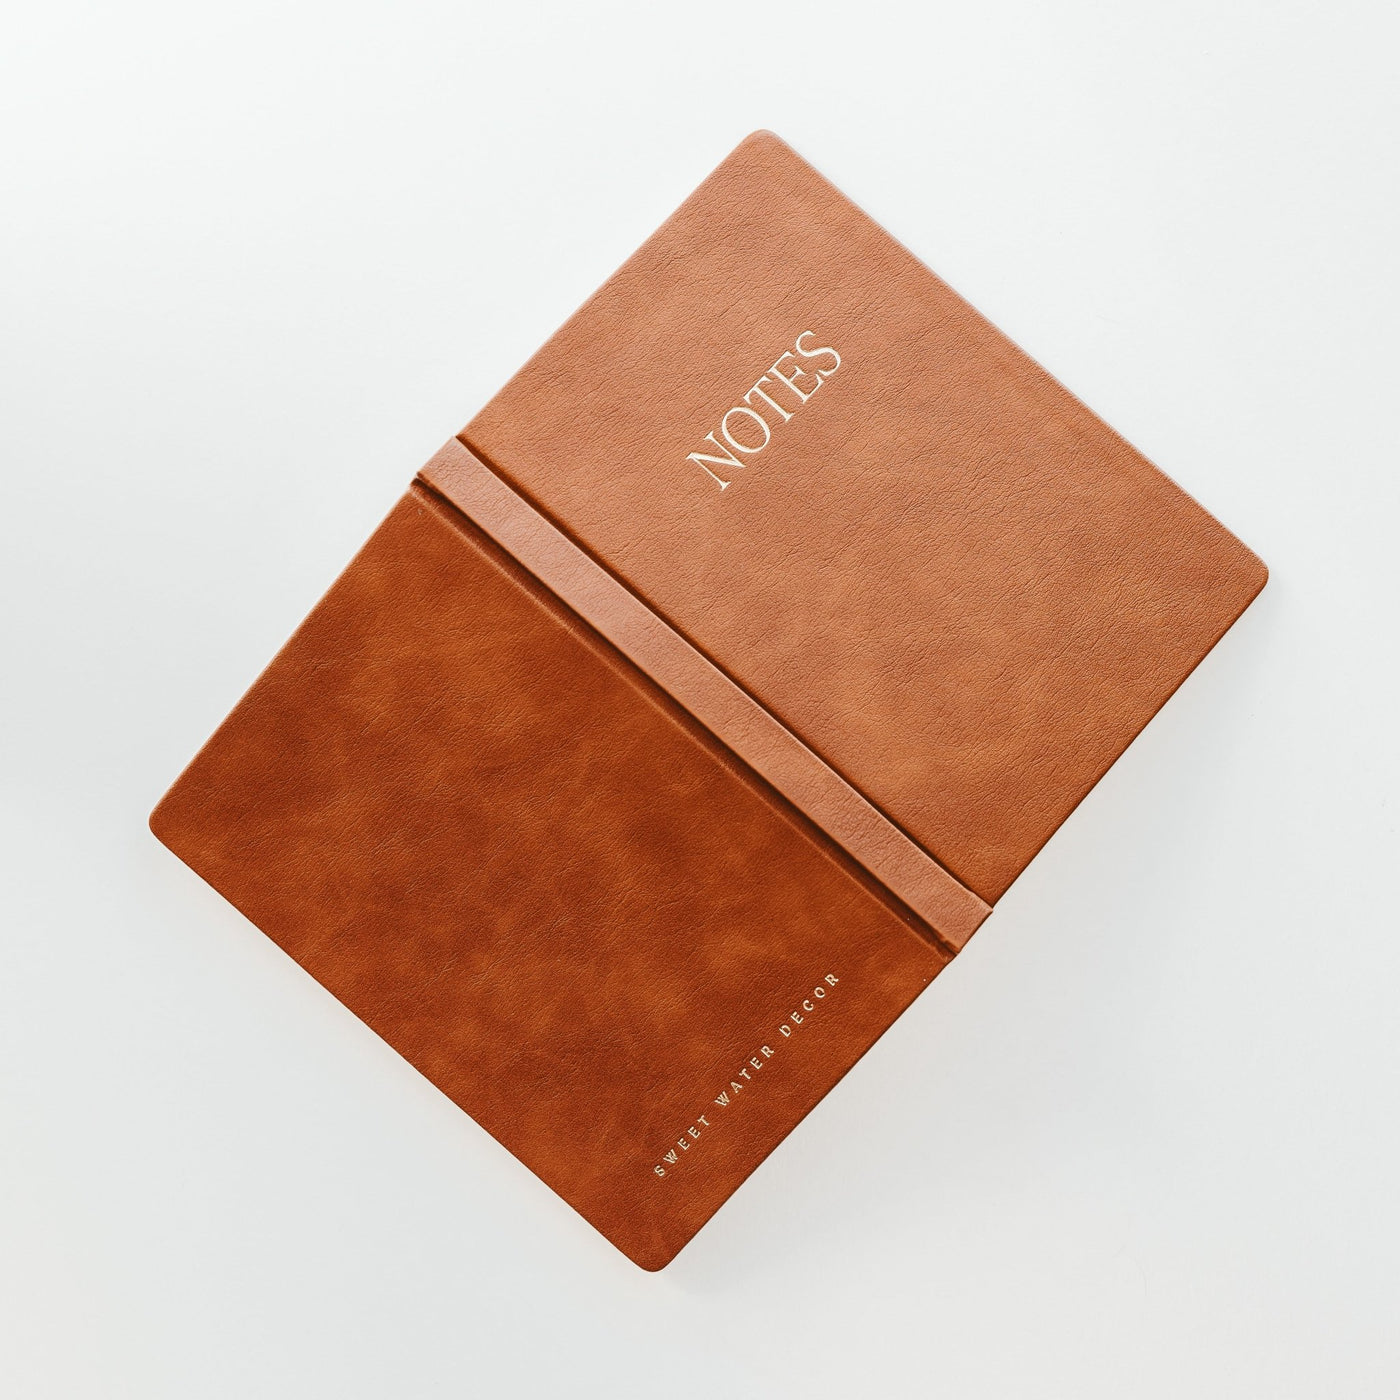 Notes Journal - Sweet Water Decor - Notebooks